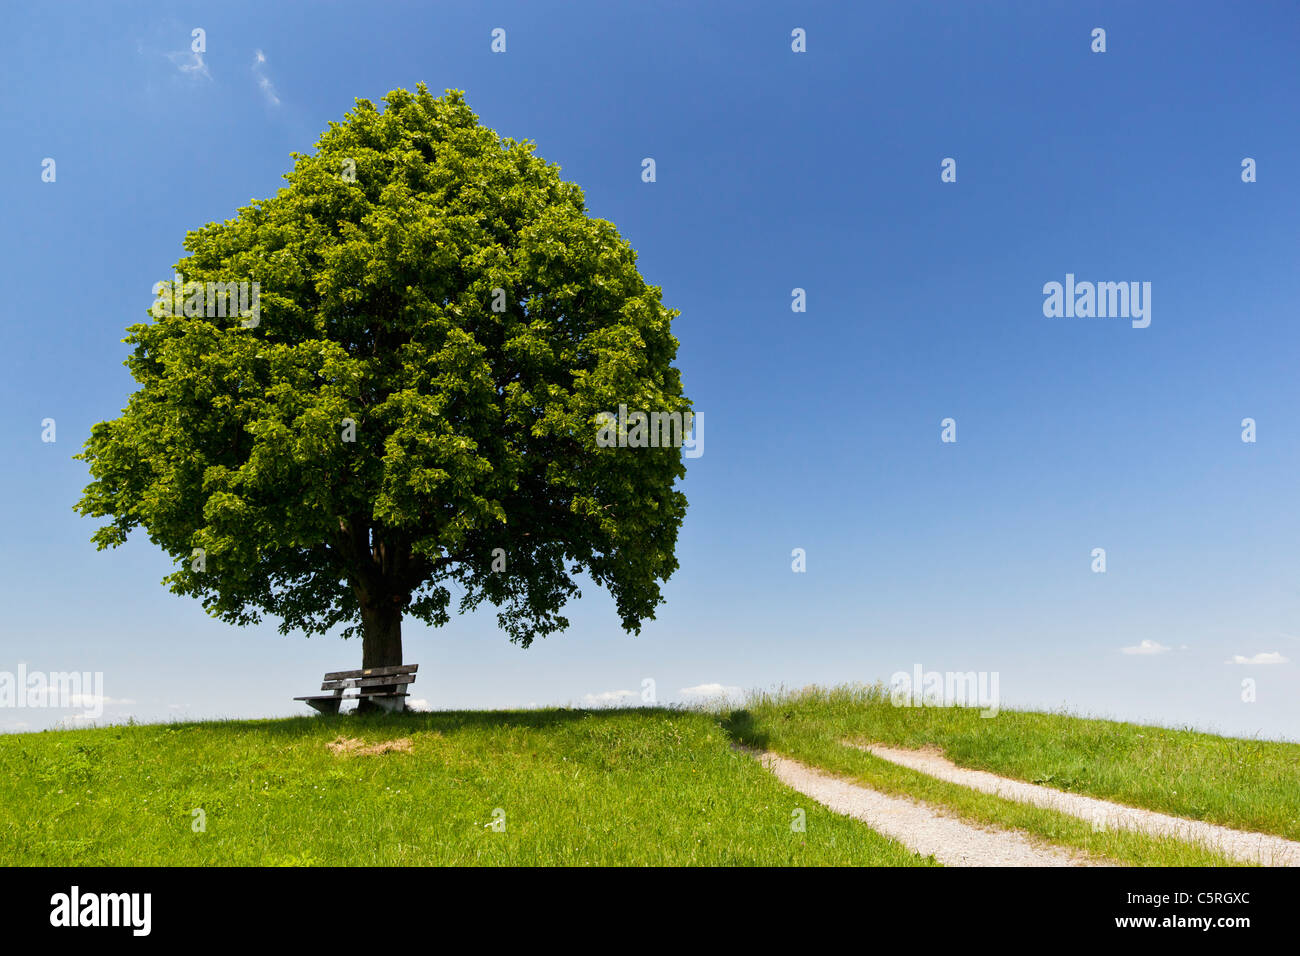 Germany, Bavaria, Irschenberg, View of Tilia tree with bench near track Stock Photo